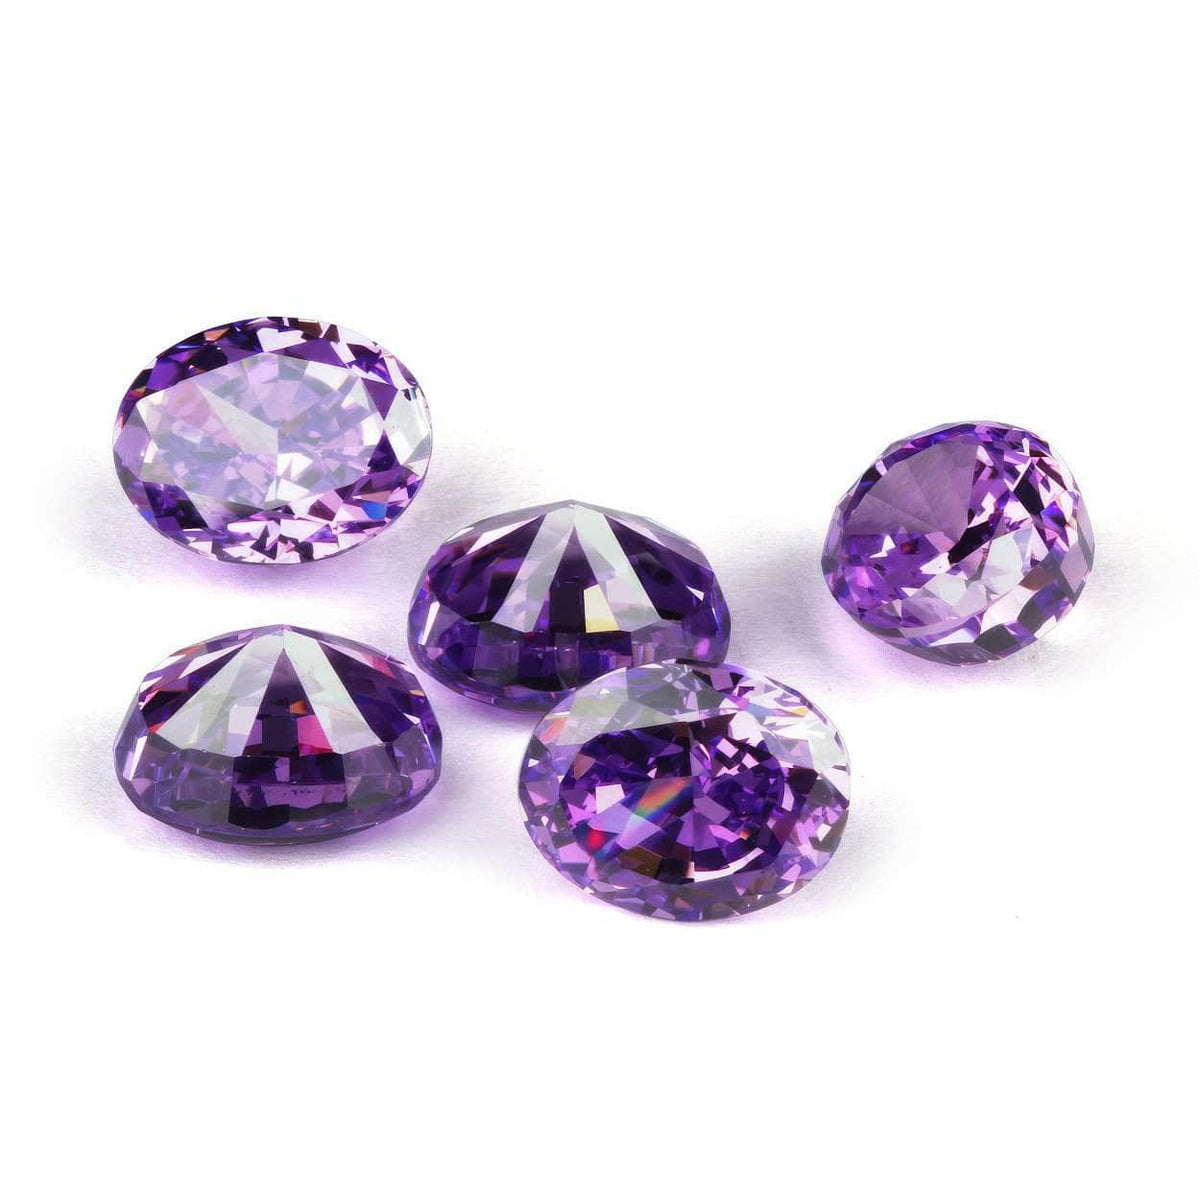 3-Set Purple Amethyst Oval-Cut Lab-Grown Diamond Gemstone 3*5mm / Purple Amethyst / Oval